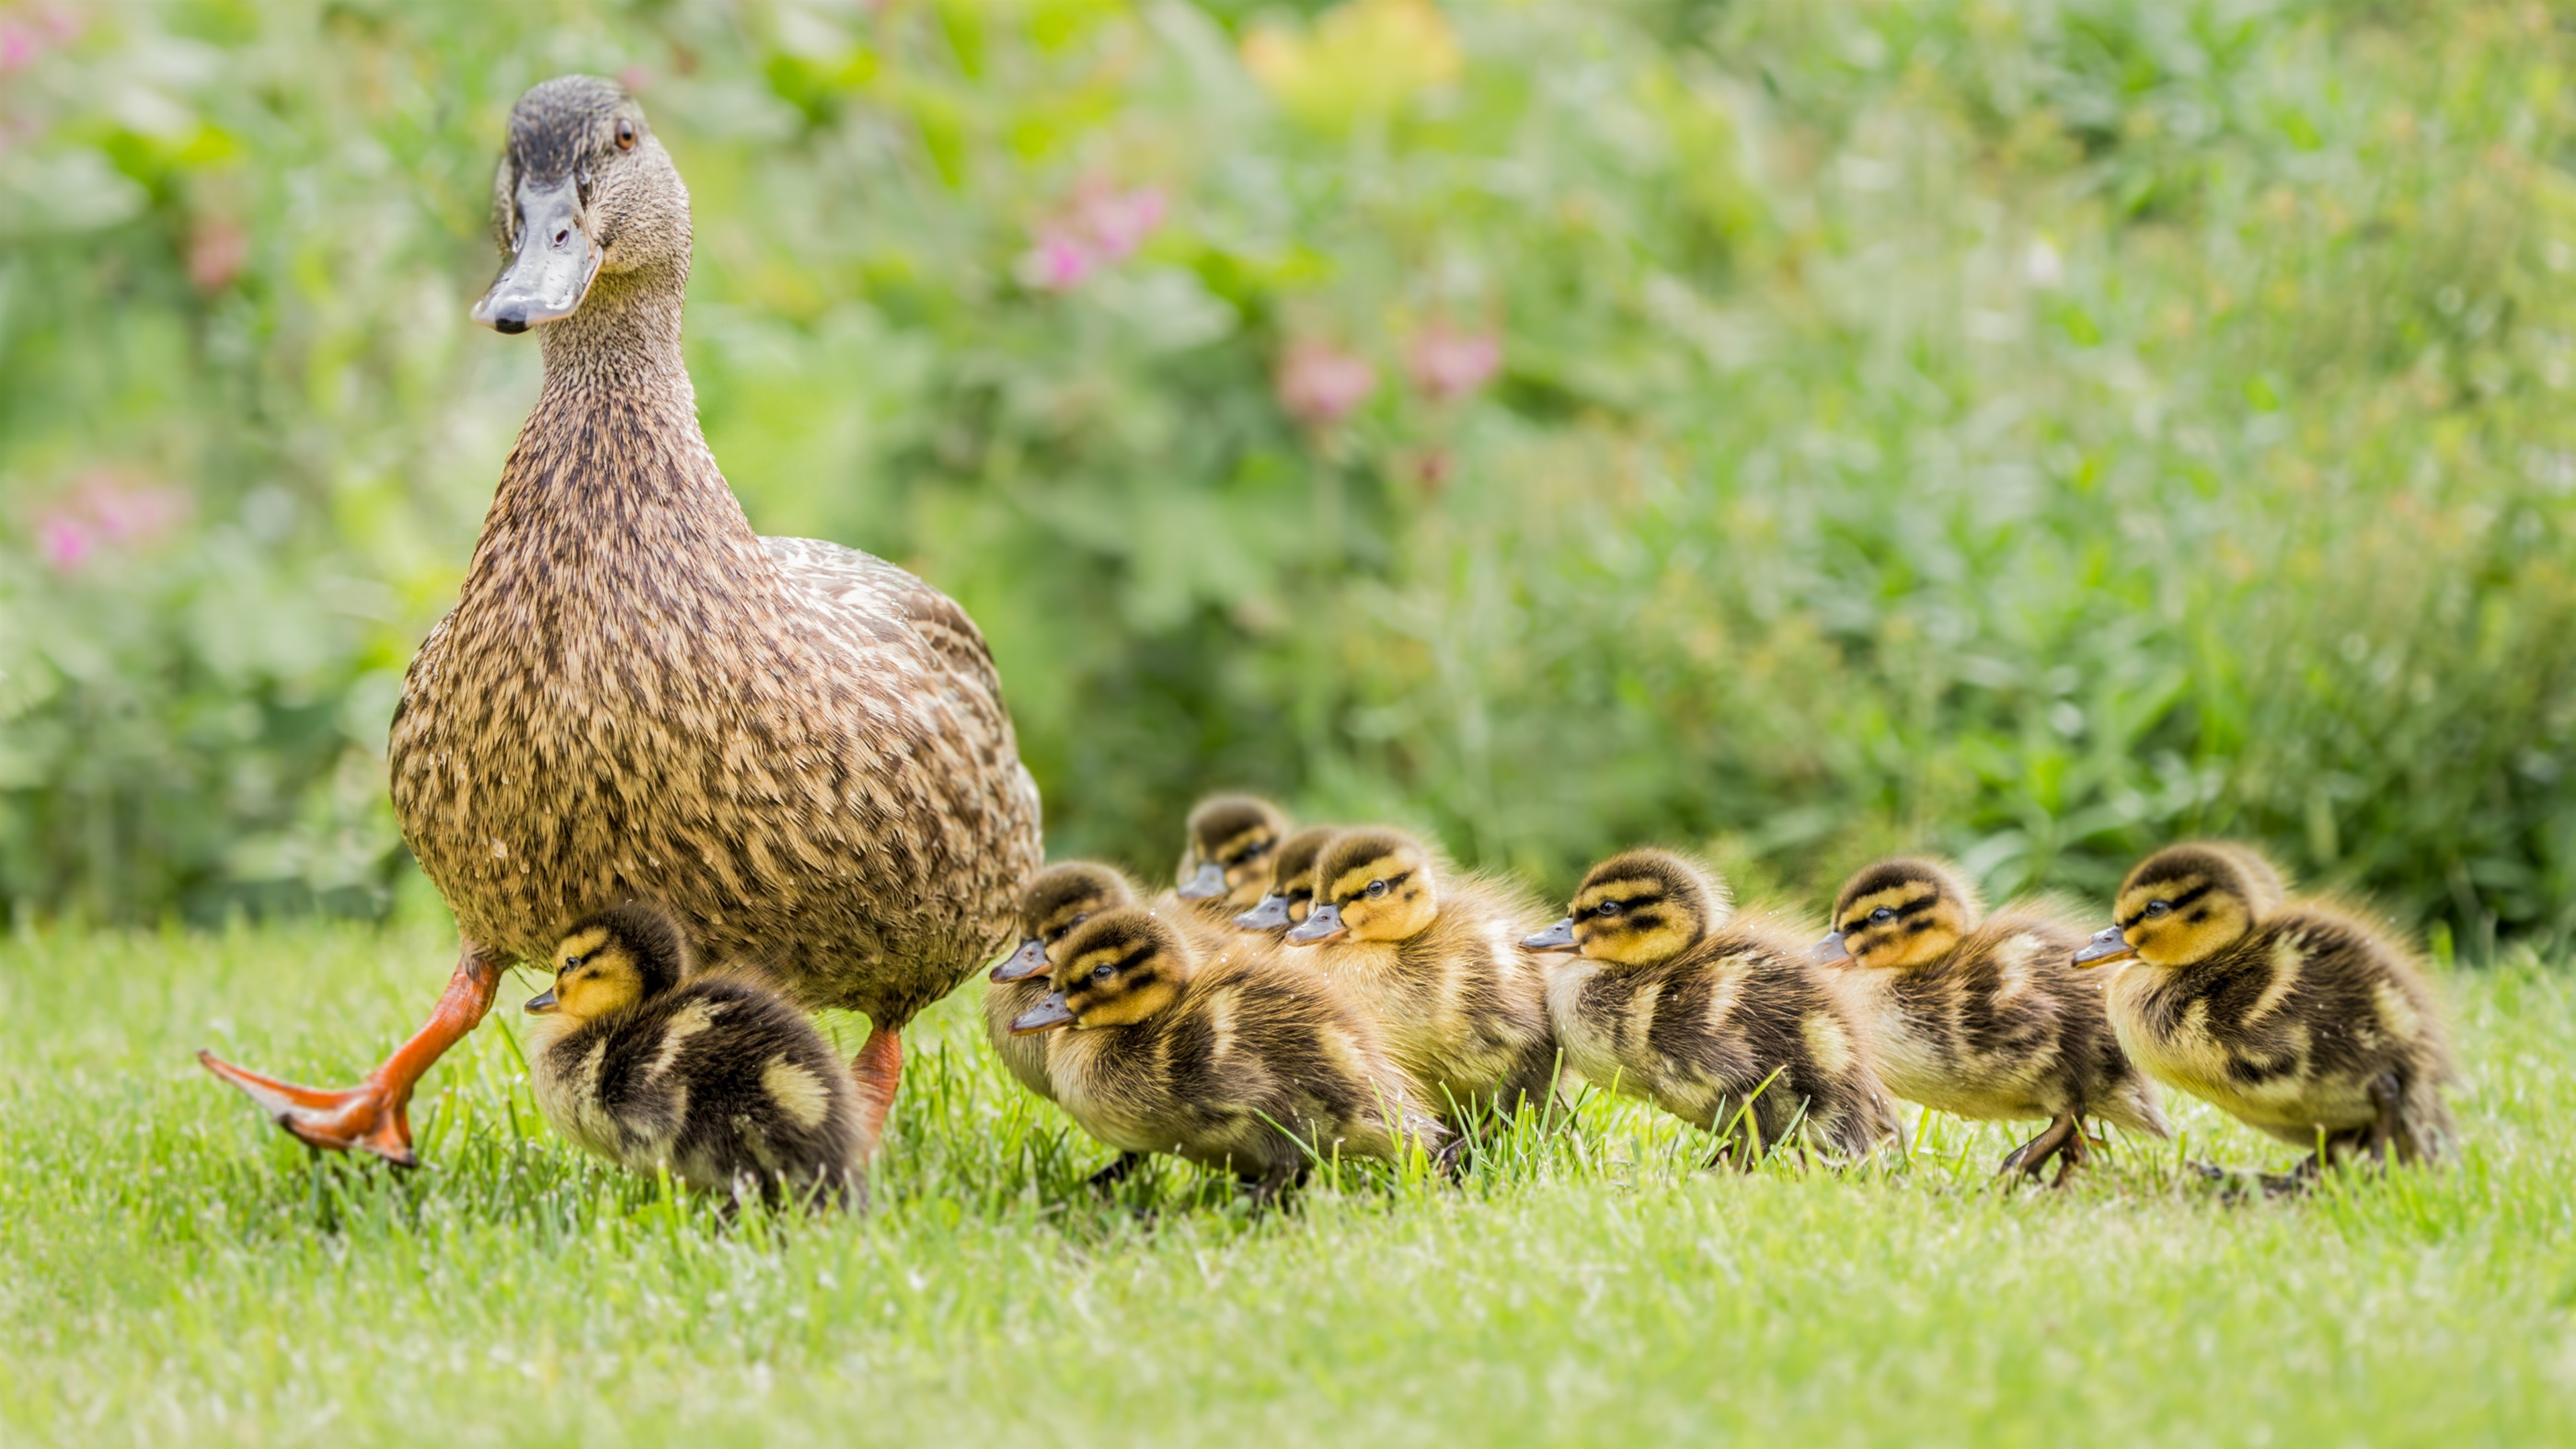 Wallpaper Ducks, family, grass, ducklings 3840x2160 UHD 4K Picture, Image